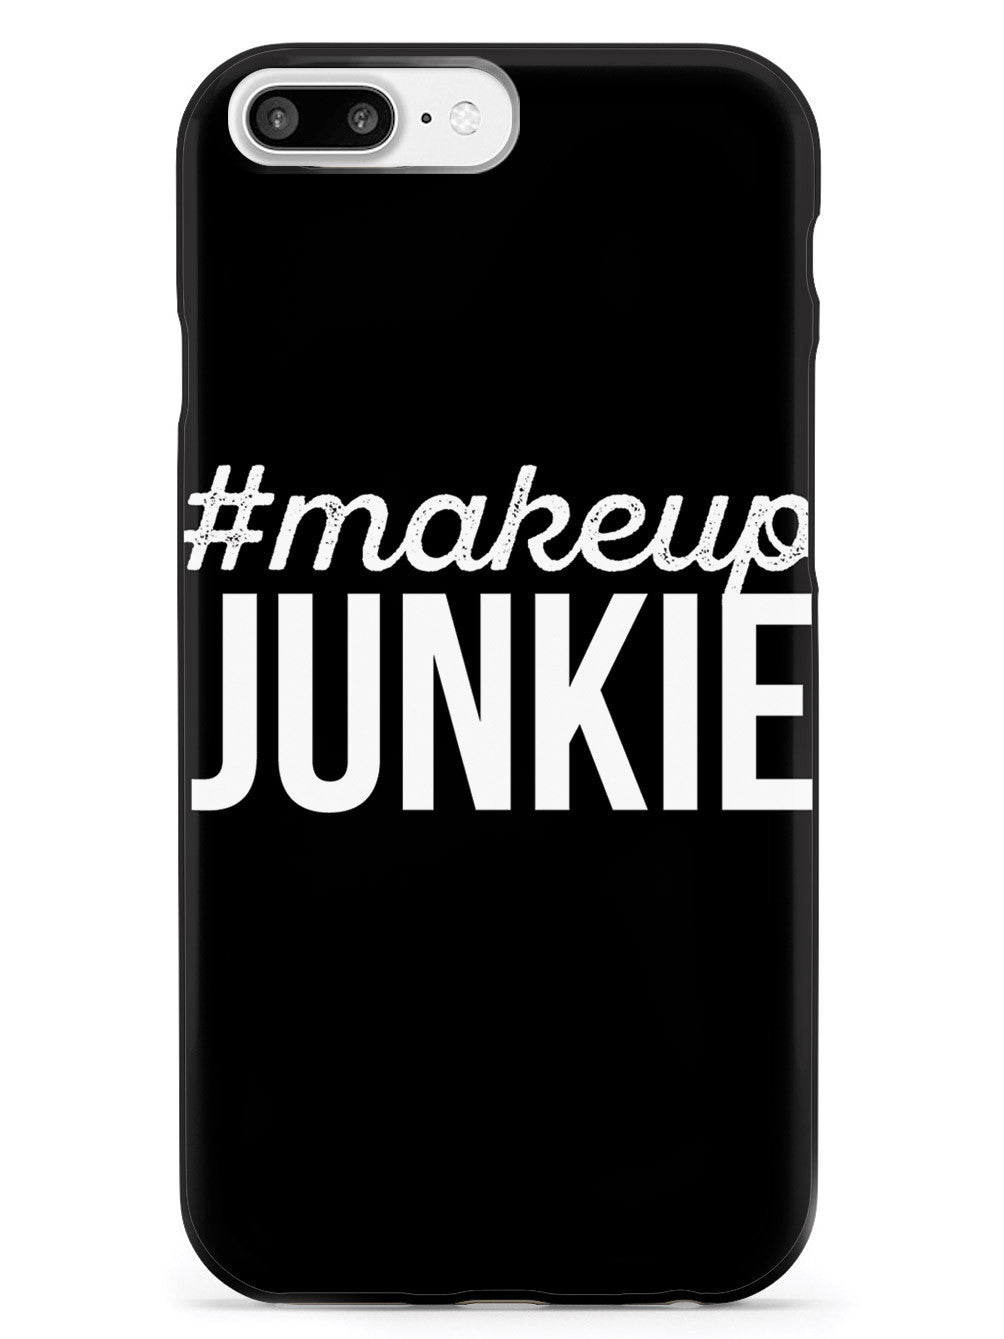 #MakeupJunkie Case